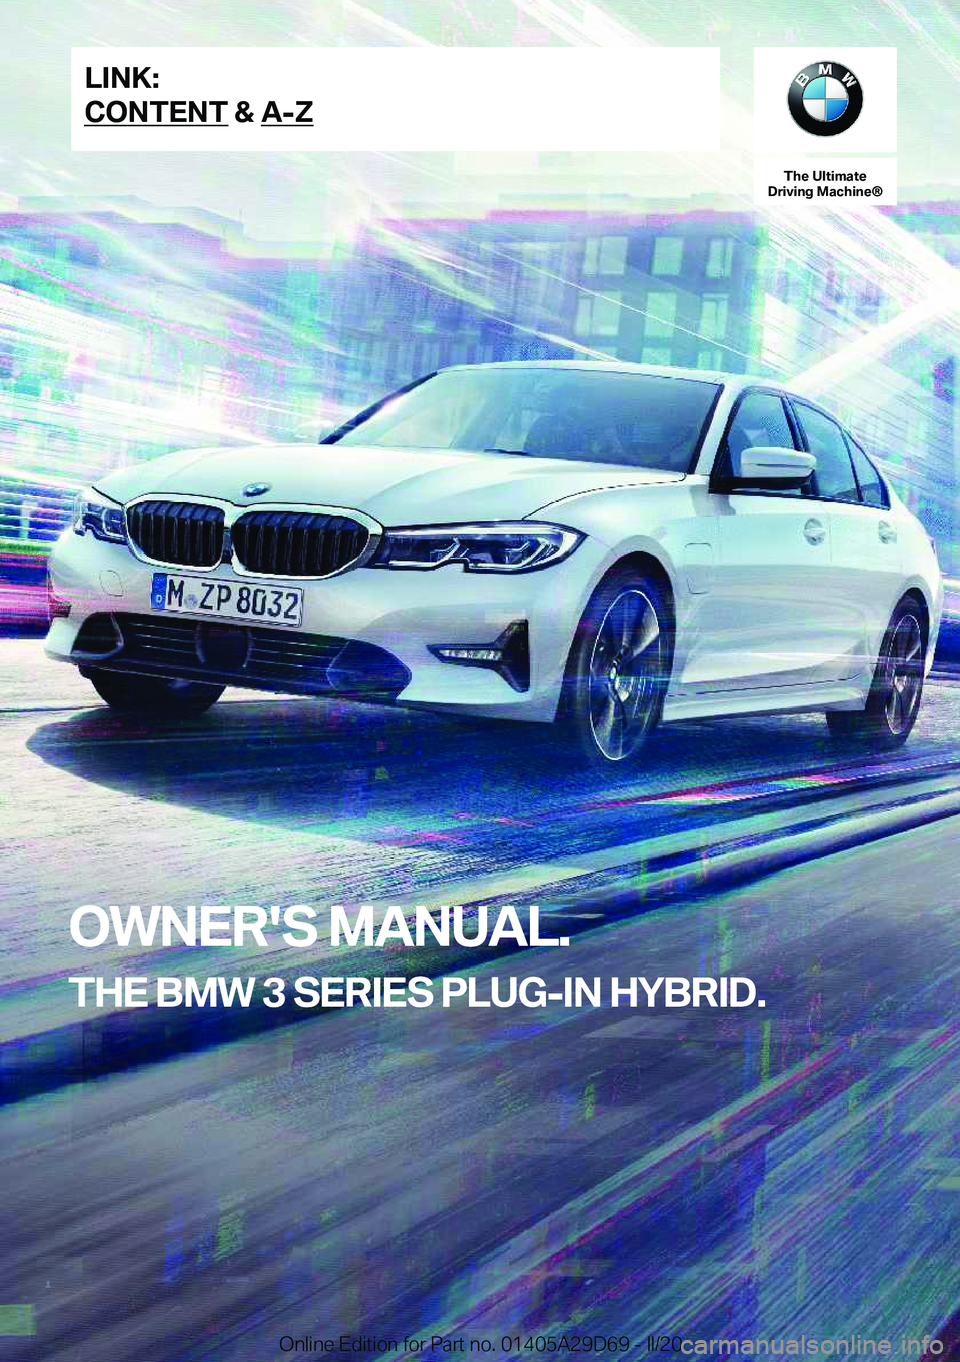 BMW 3 SERIES SEDAN PLUG-IN HYBRID 2021  Owners Manual �T�h�e��U�l�t�i�m�a�t�e�D�r�i�v�i�n�g��M�a�c�h�i�n�e�n�O�W�N�E�R�'�S��M�A�N�U�A�L�.
�T�H�E��B�M�W��3��S�E�R�I�E�S��P�L�U�G�-�I�N��H�Y�B�R�I�D�.
�L�I�N�K�:
�C�O�N�T�E�N�T��&��A�-�Z�O�n�l�